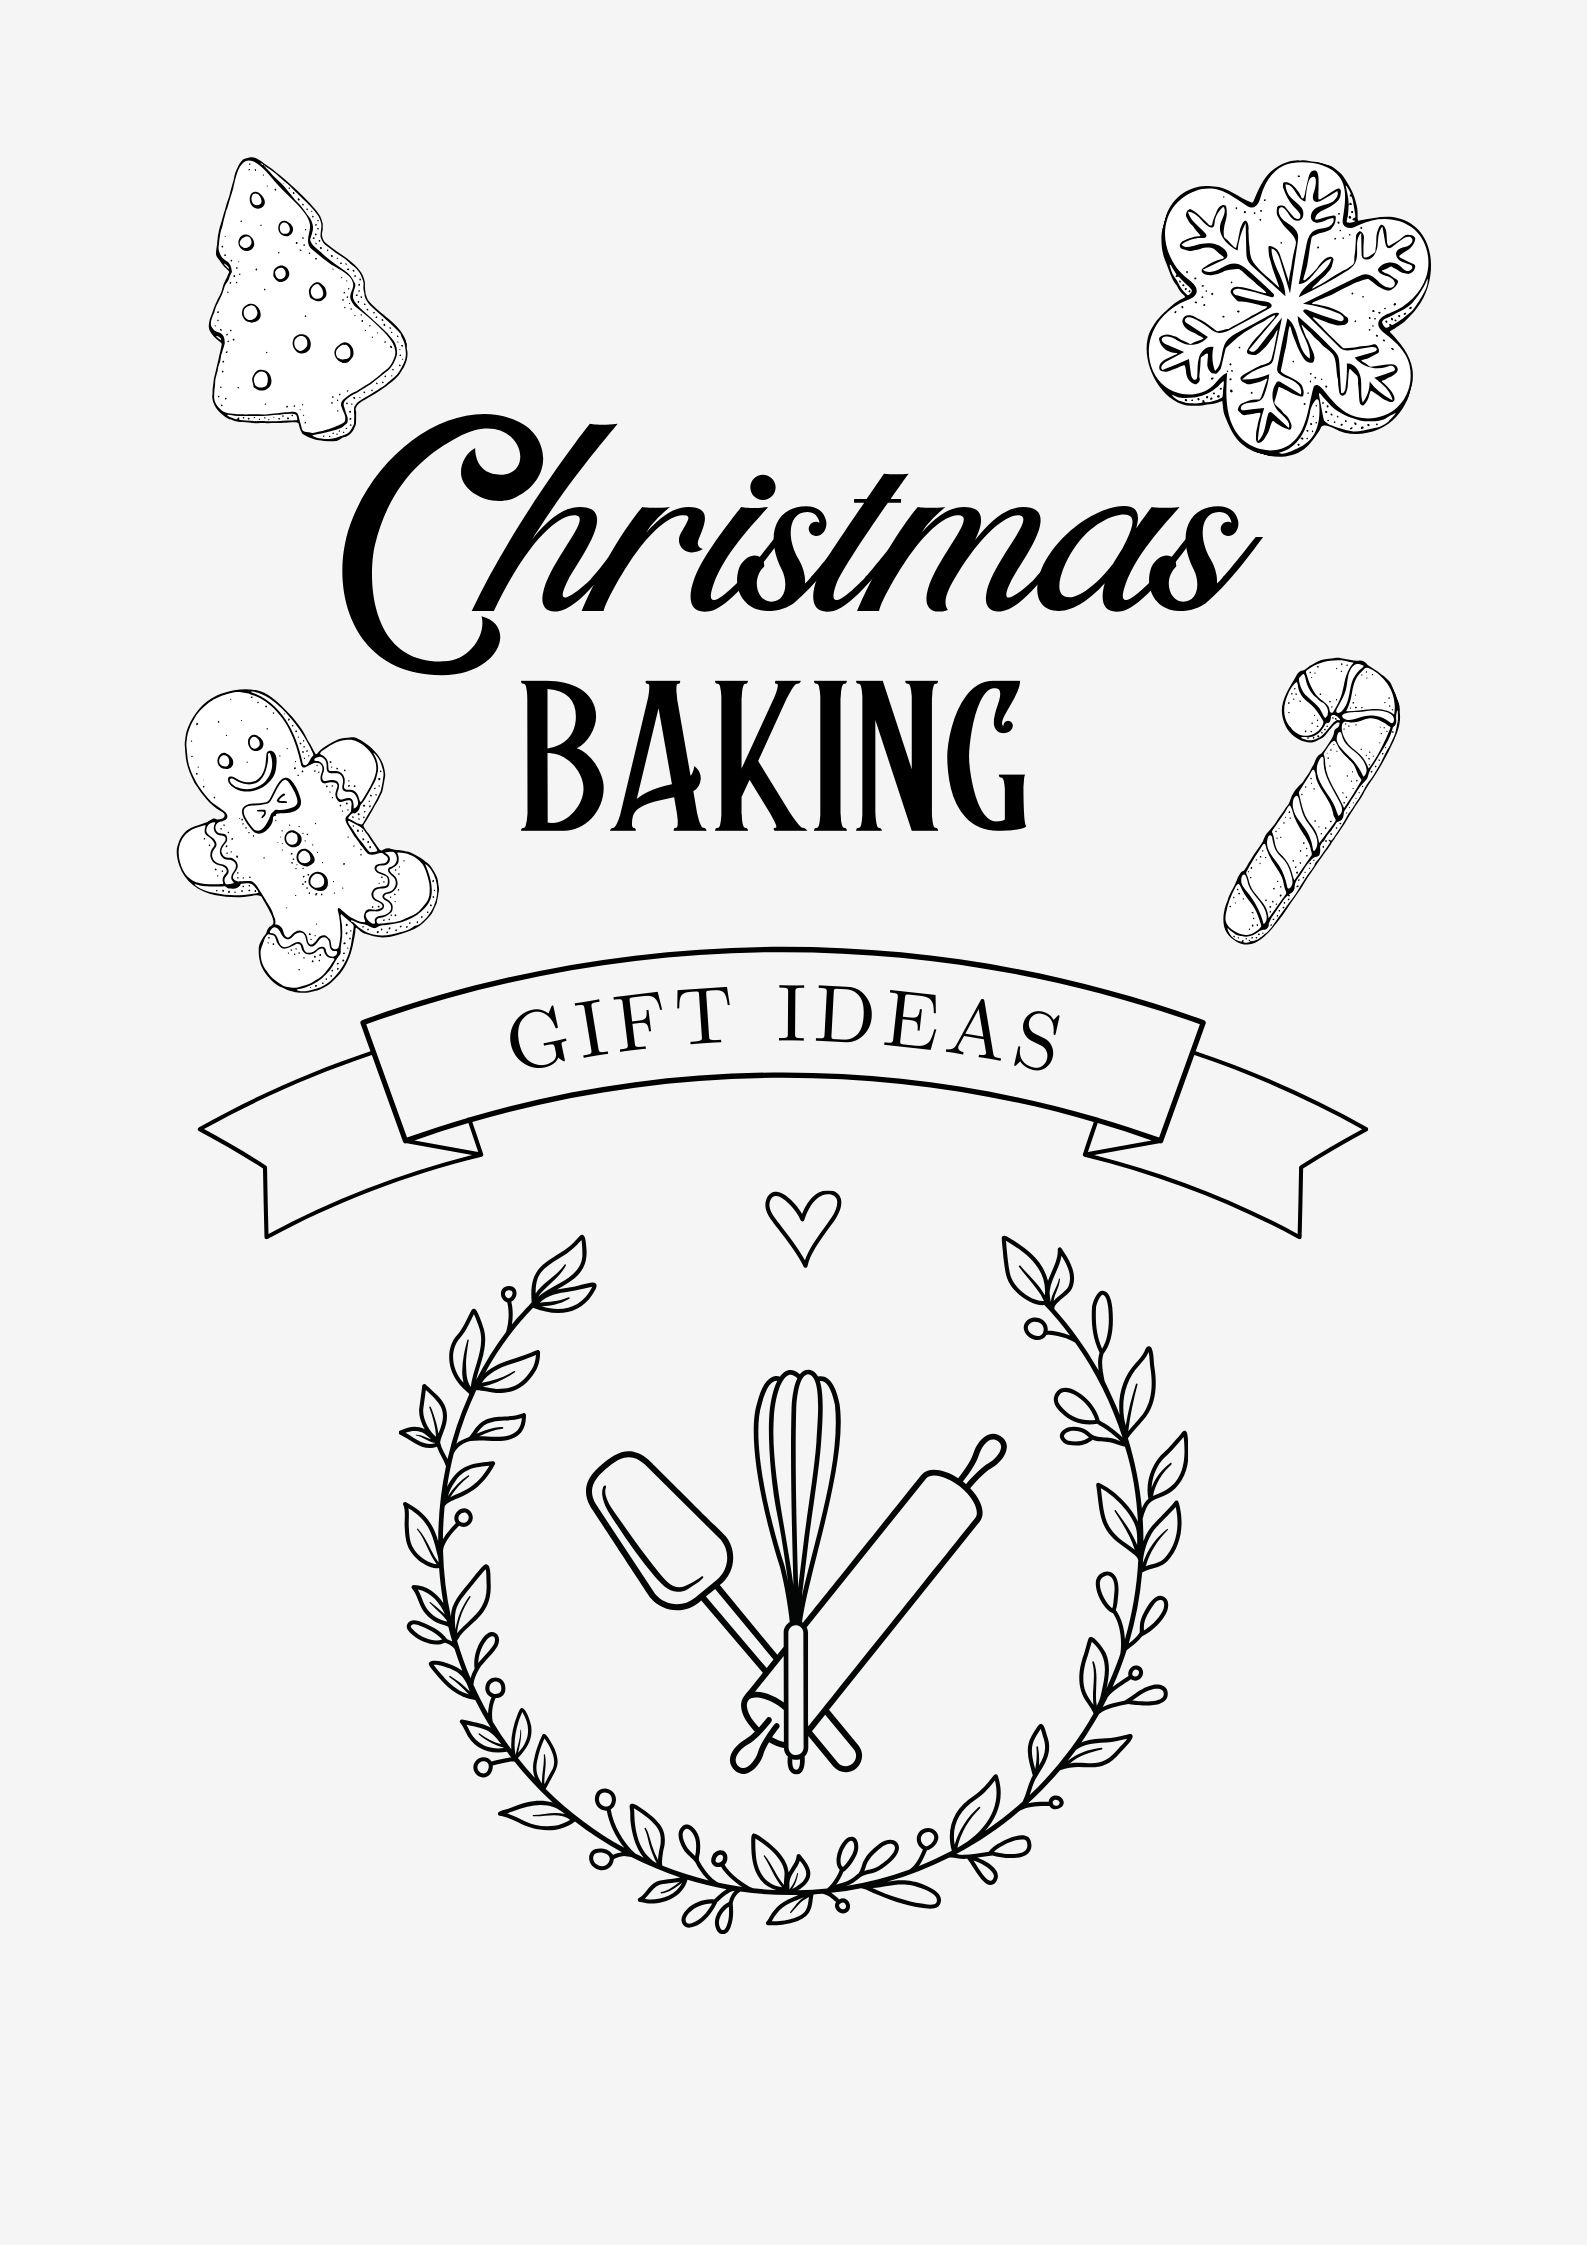 Top Ten Christmas Baking Ideas for a Special Gift